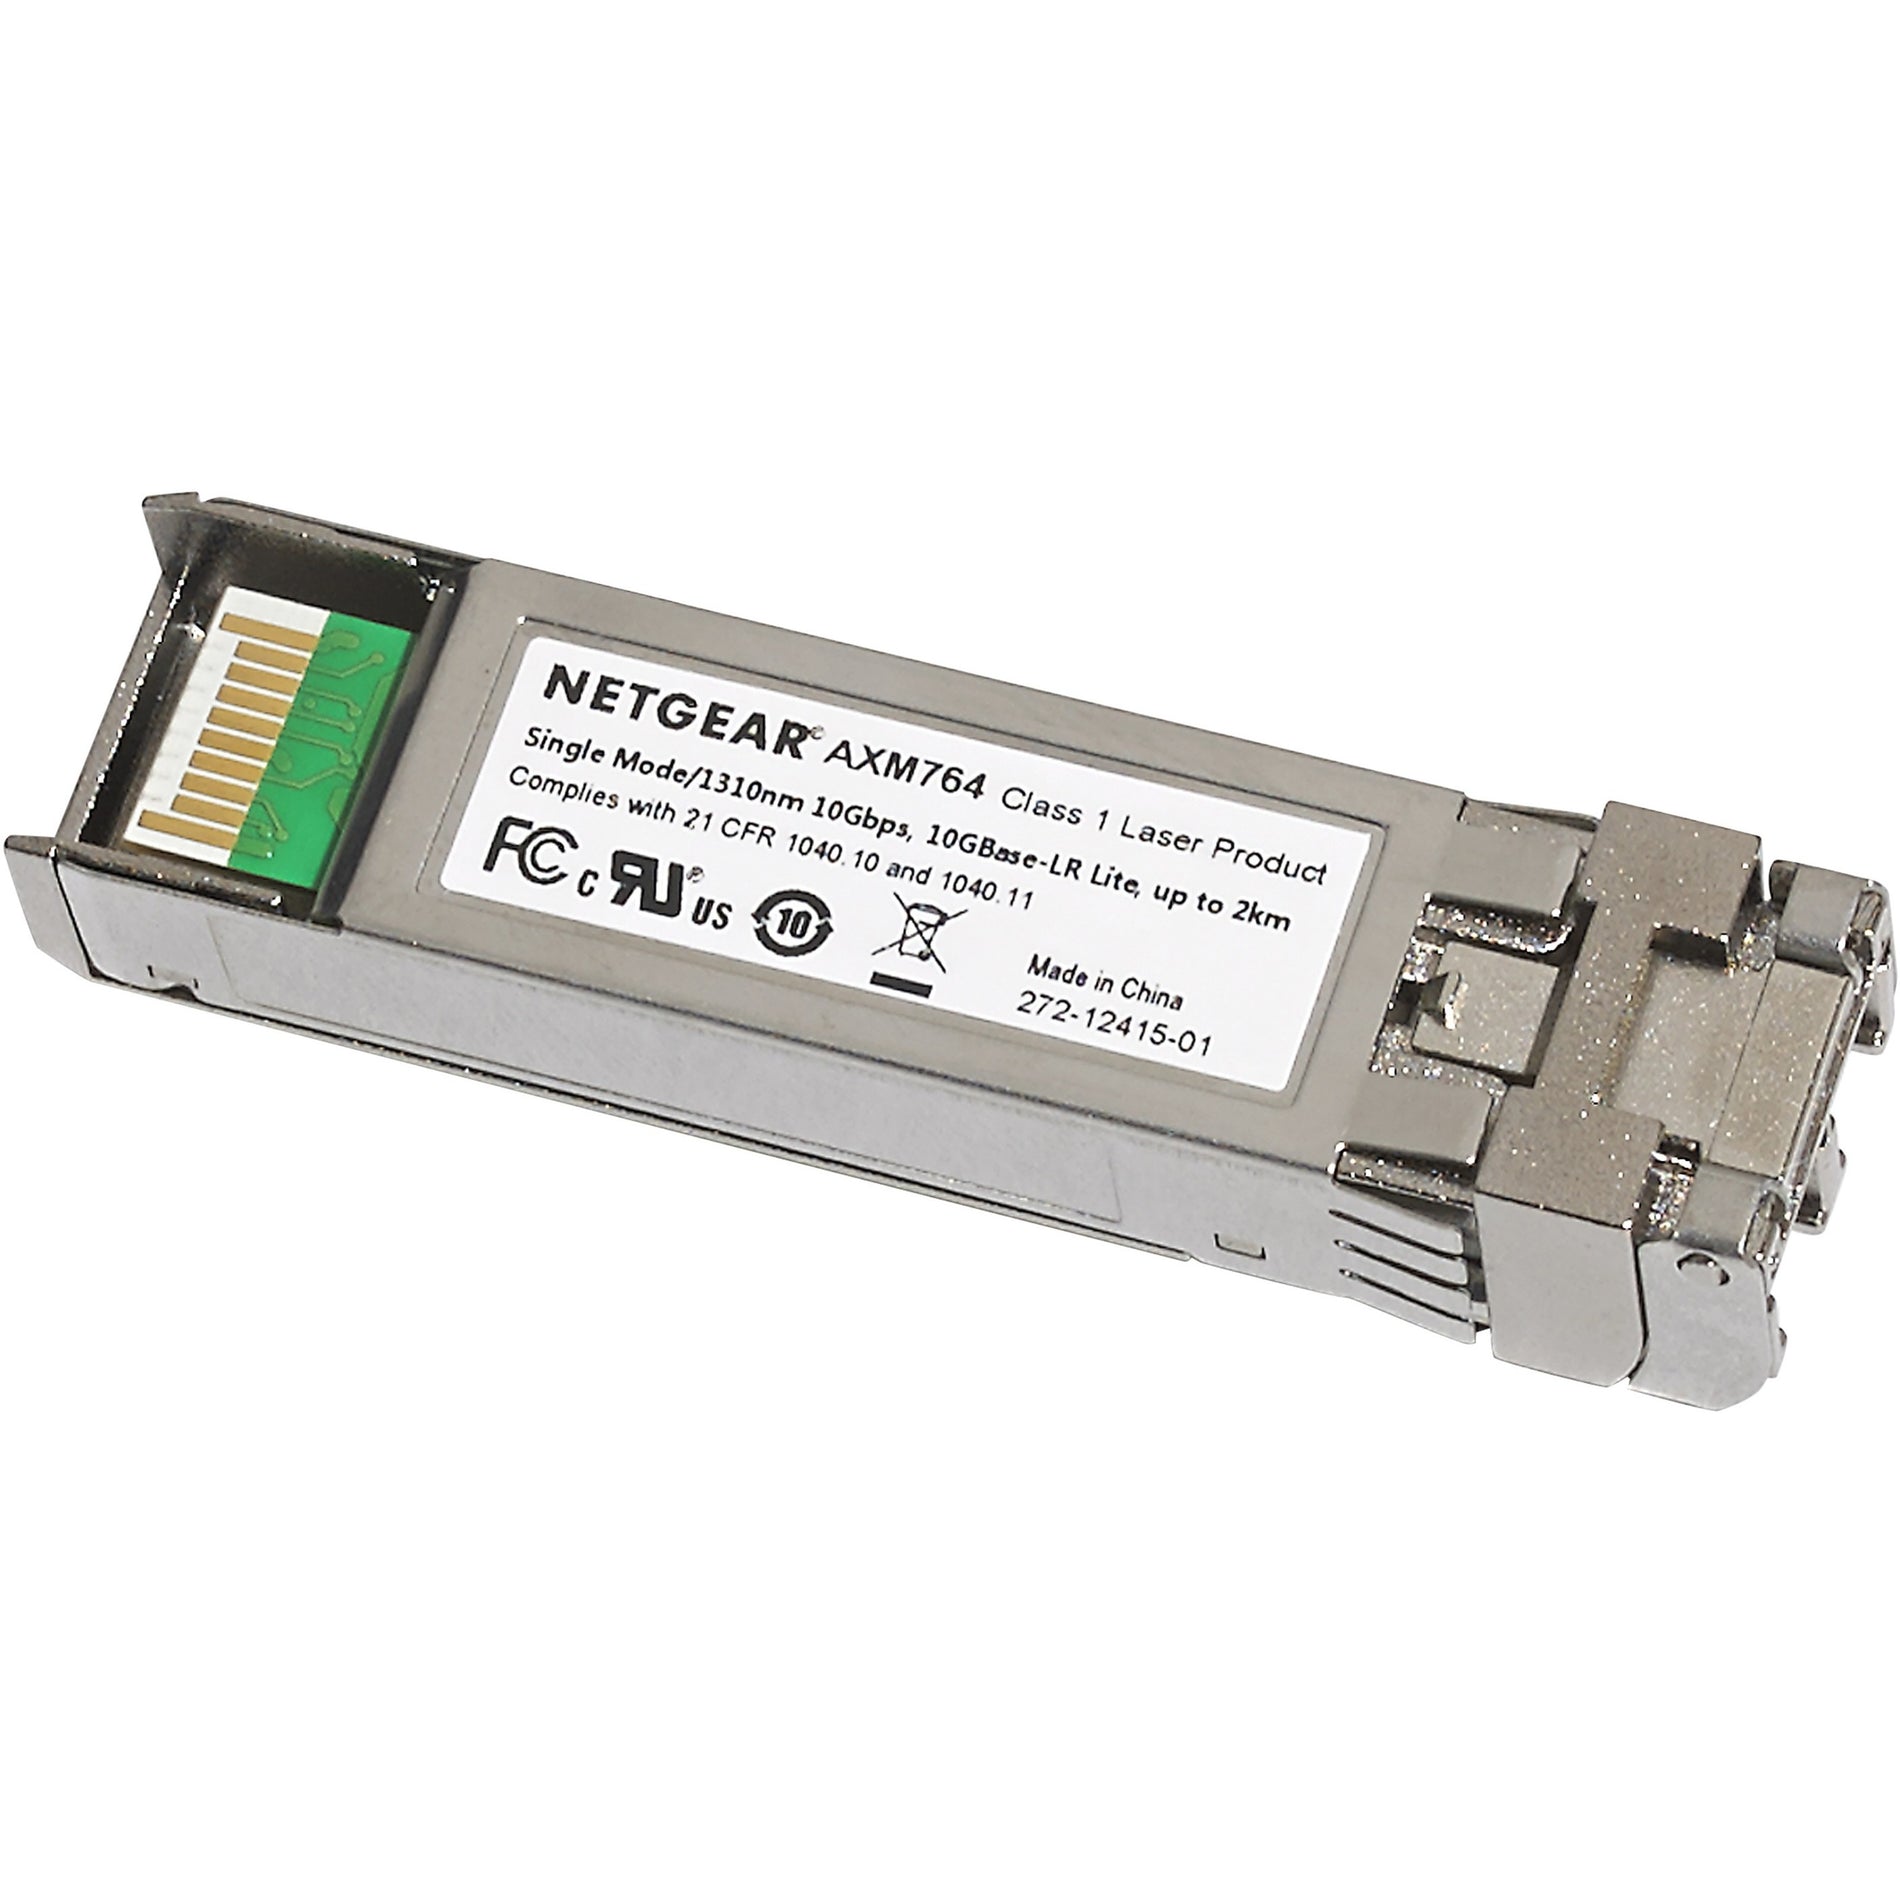 Netgear AXM764-10000S ProSAFE 10 Gigabit Base-LR Lite SFP+ Single Mode Module, 10GBase-LR, Optical Fiber, Lifetime Warranty